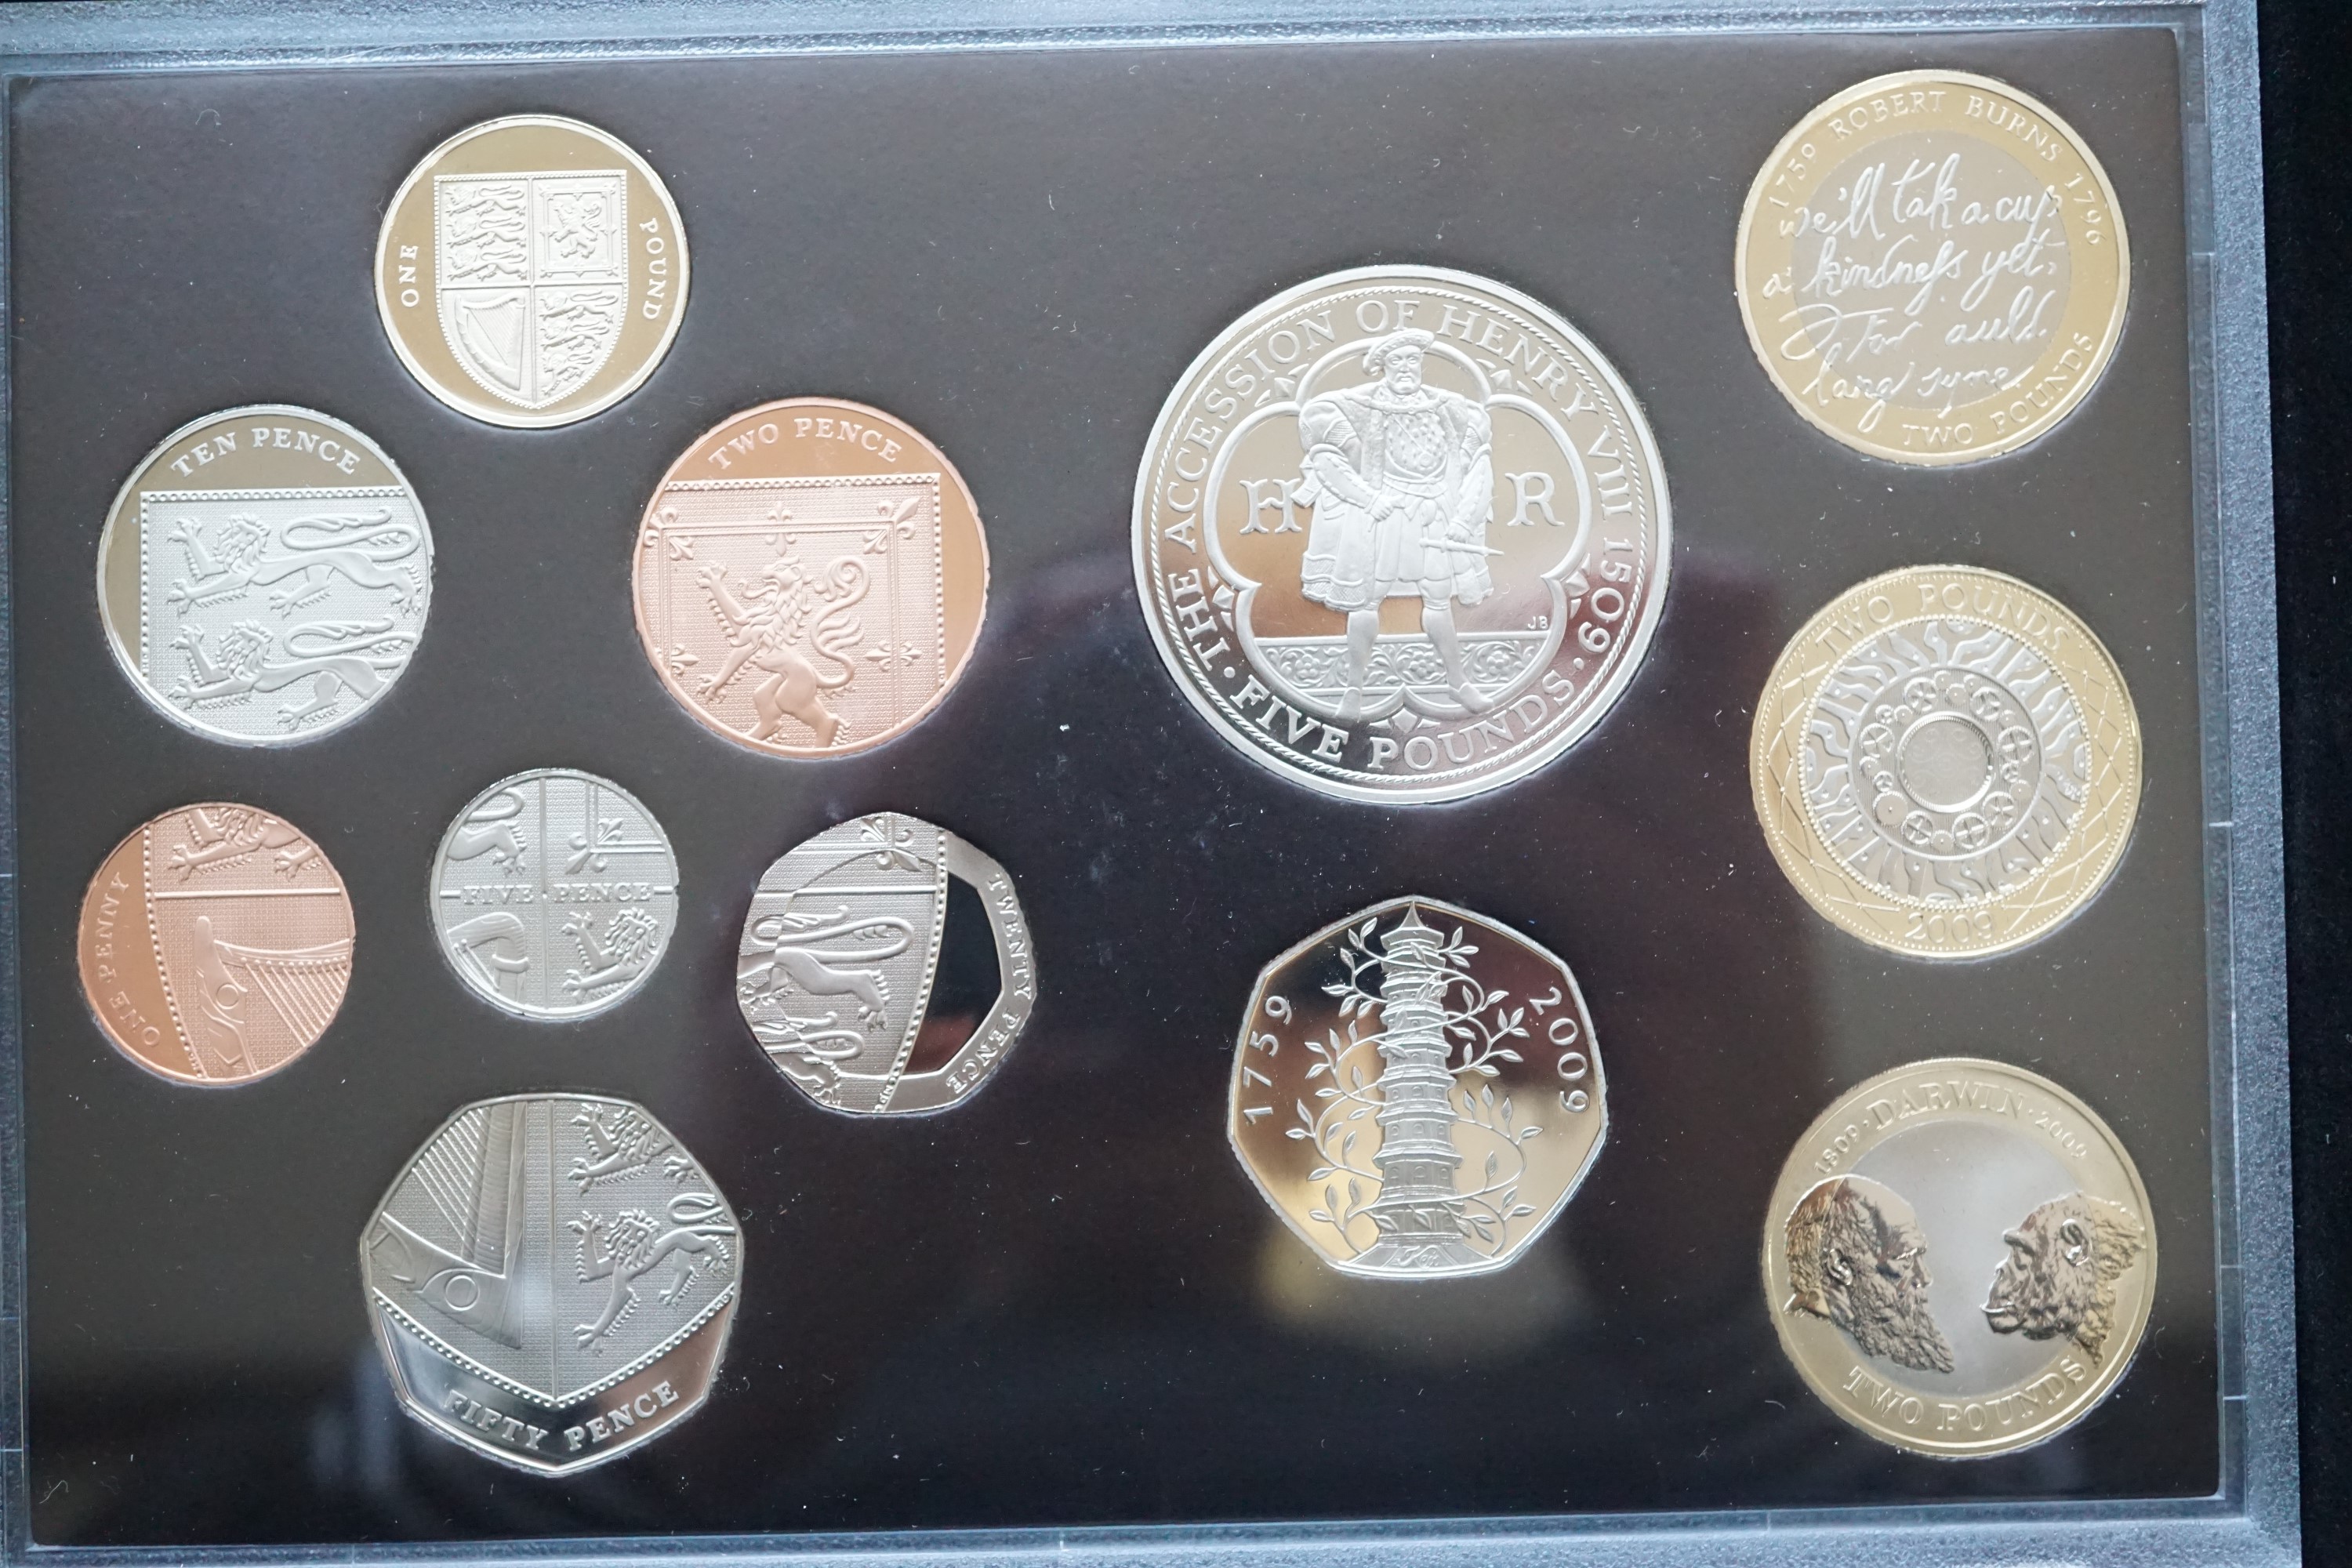 A 2009 Royal Mint proof coin set